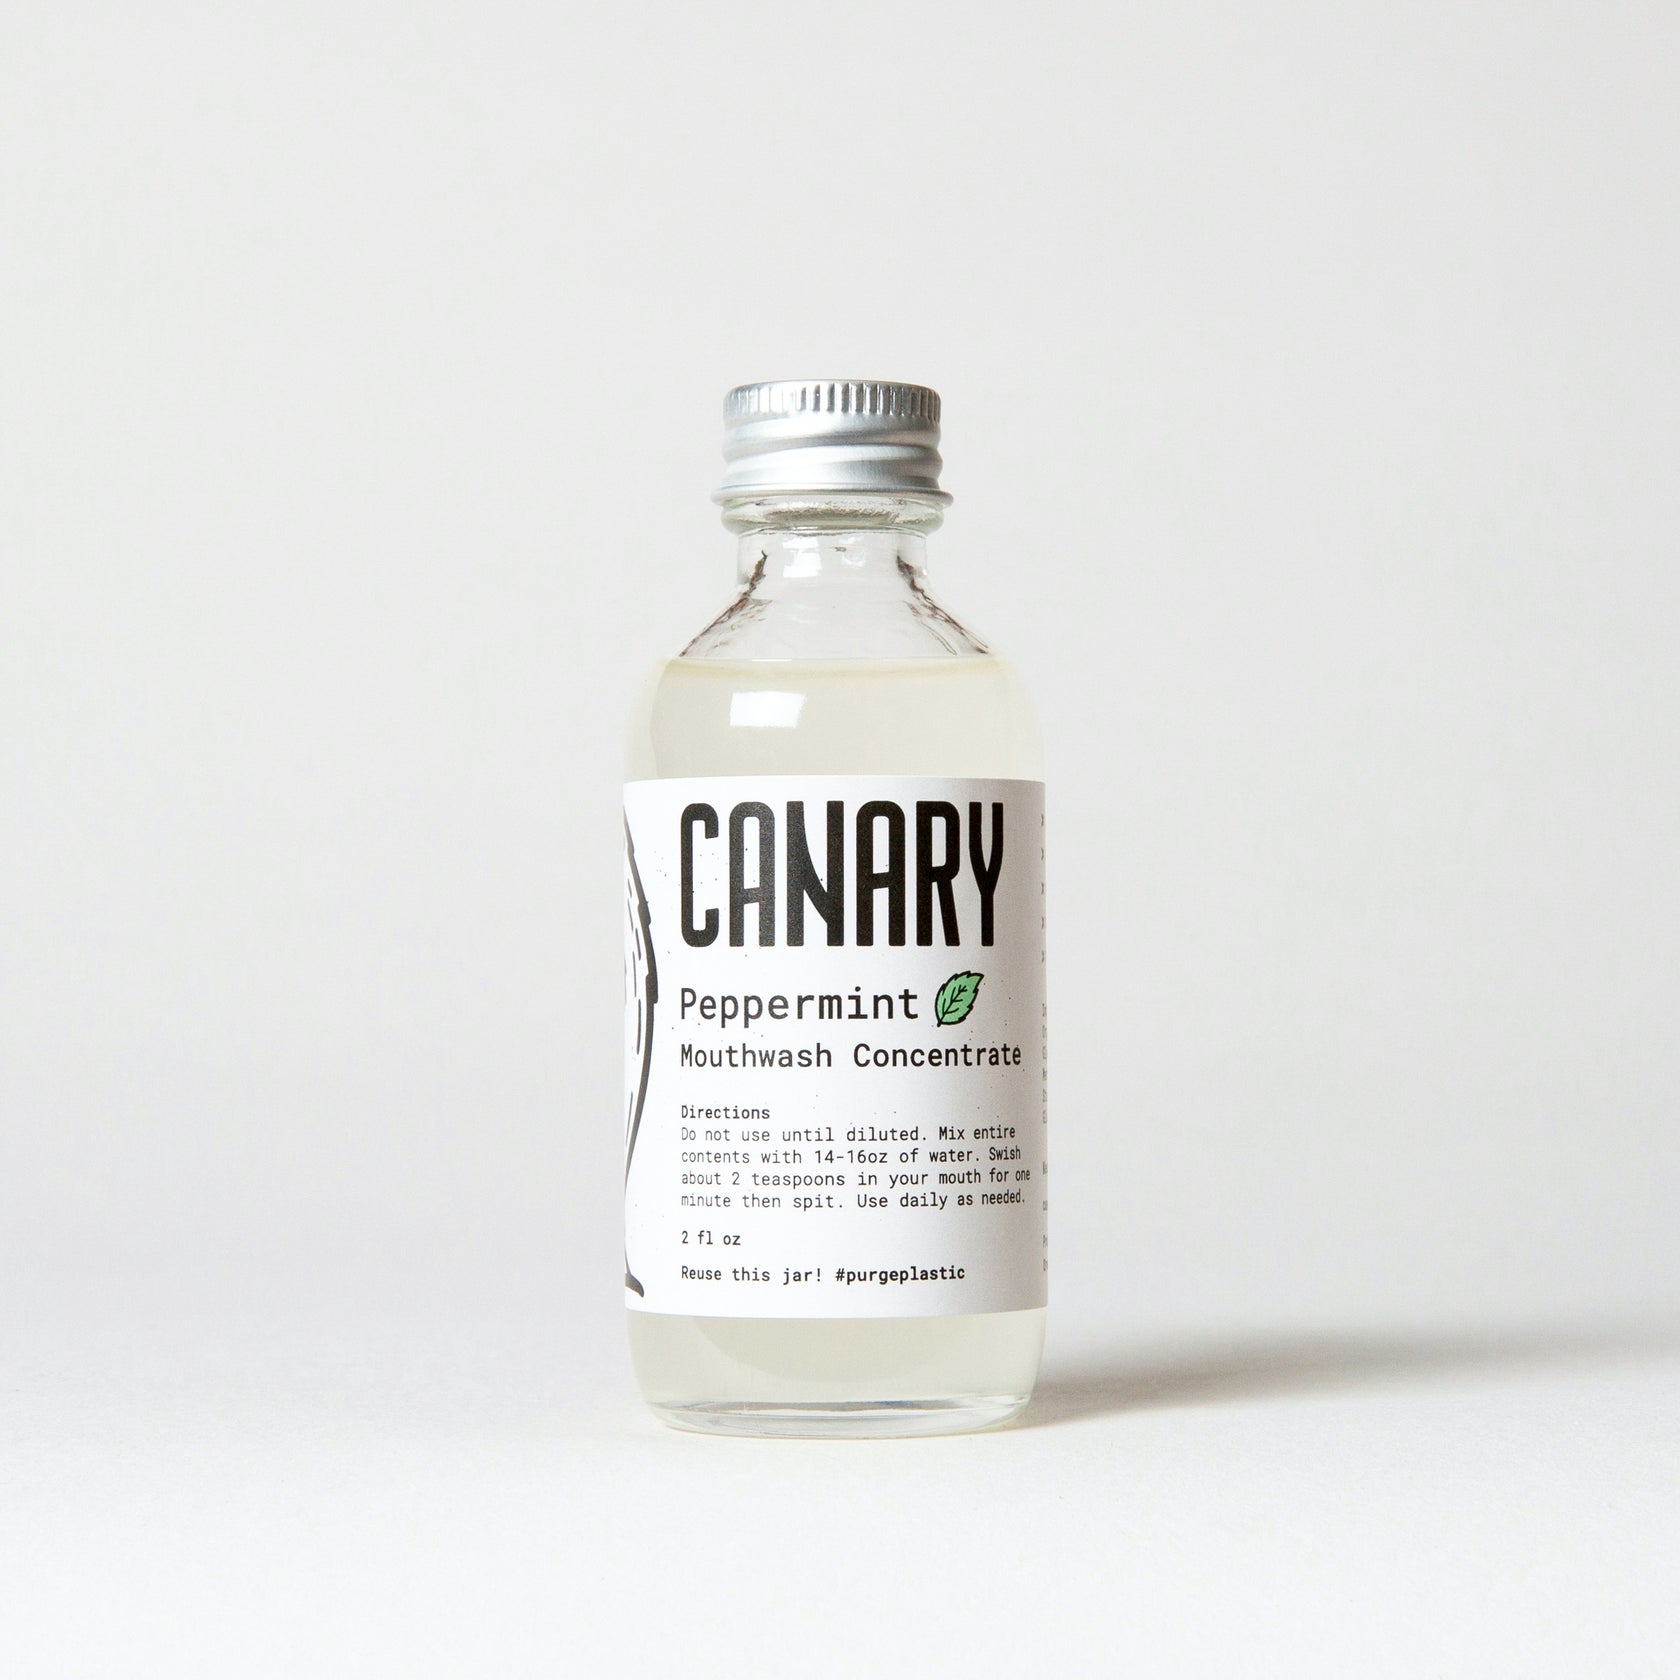 Canary Peppermint Mouthwash Concentrate 2 fluid ounces